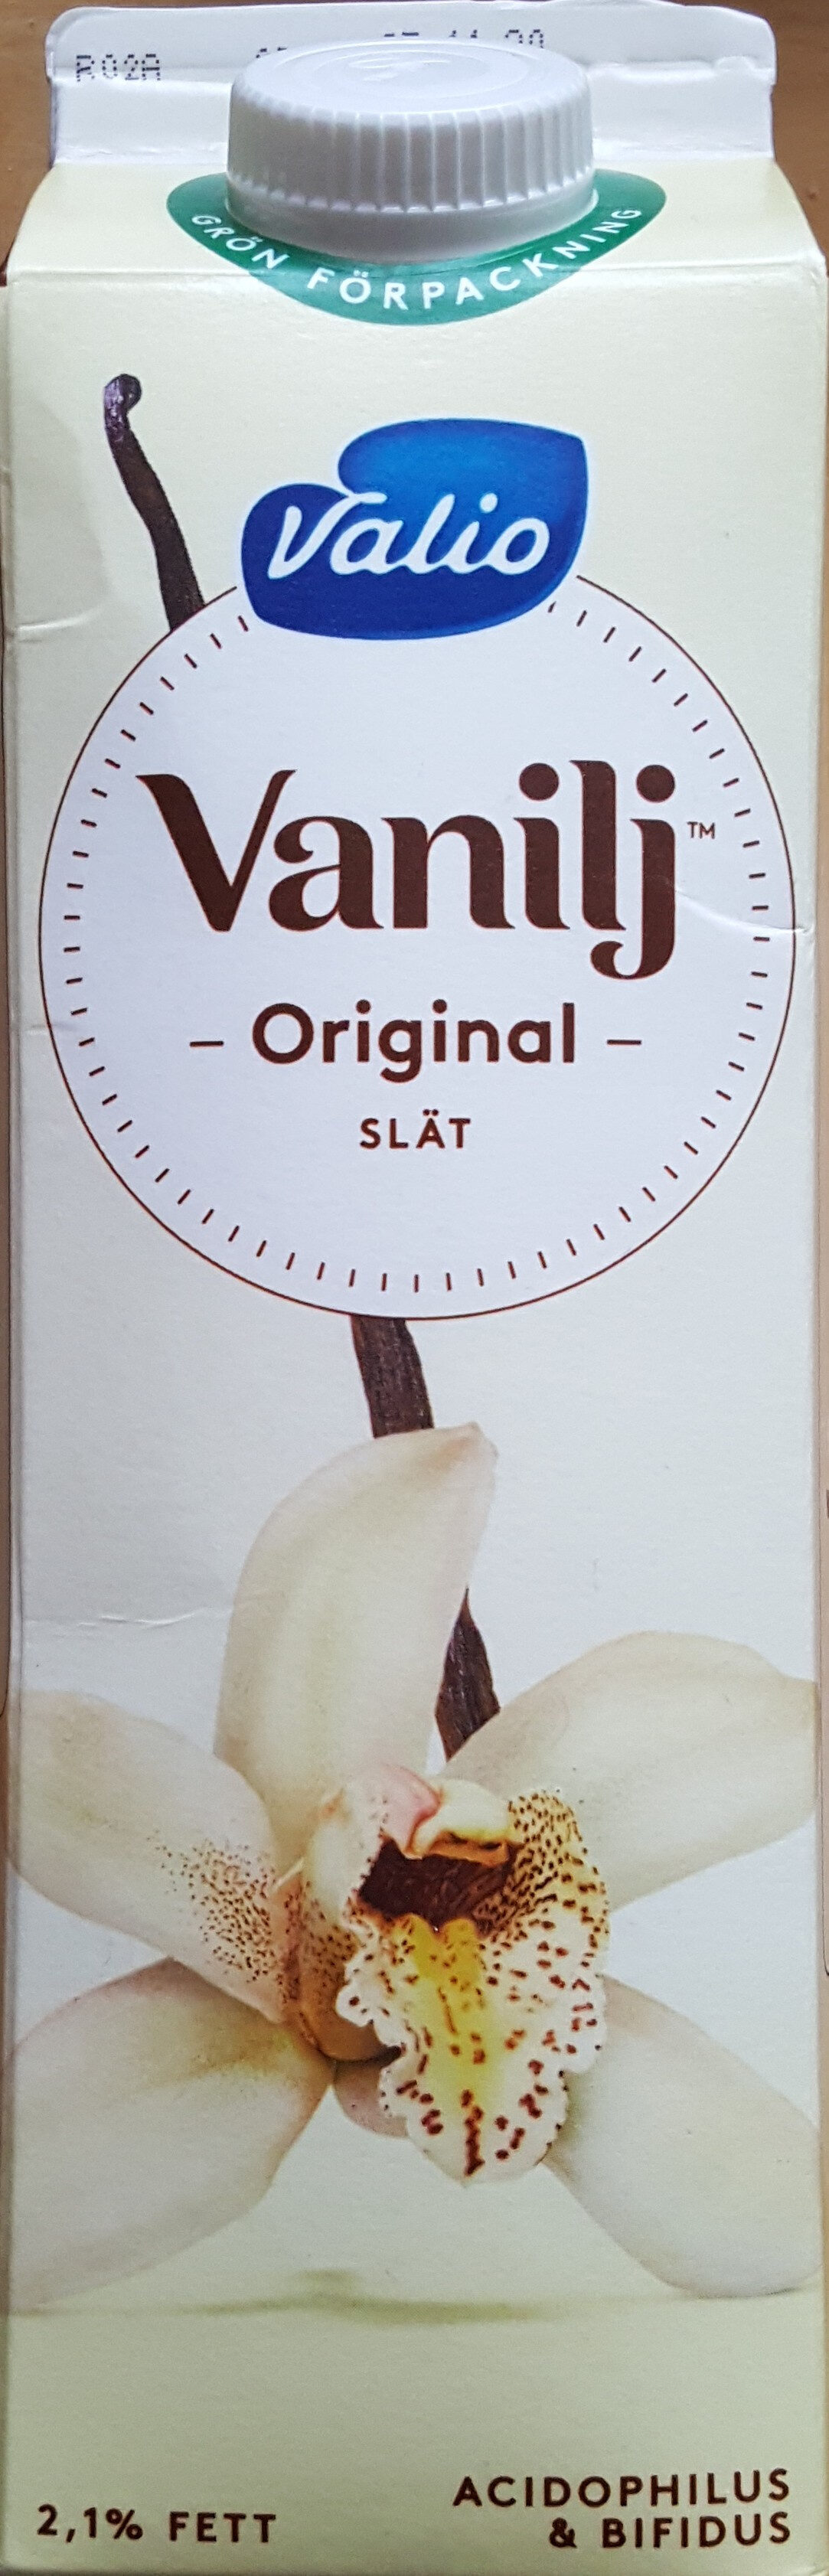 Valio Vanilj Original Slät - Produkt